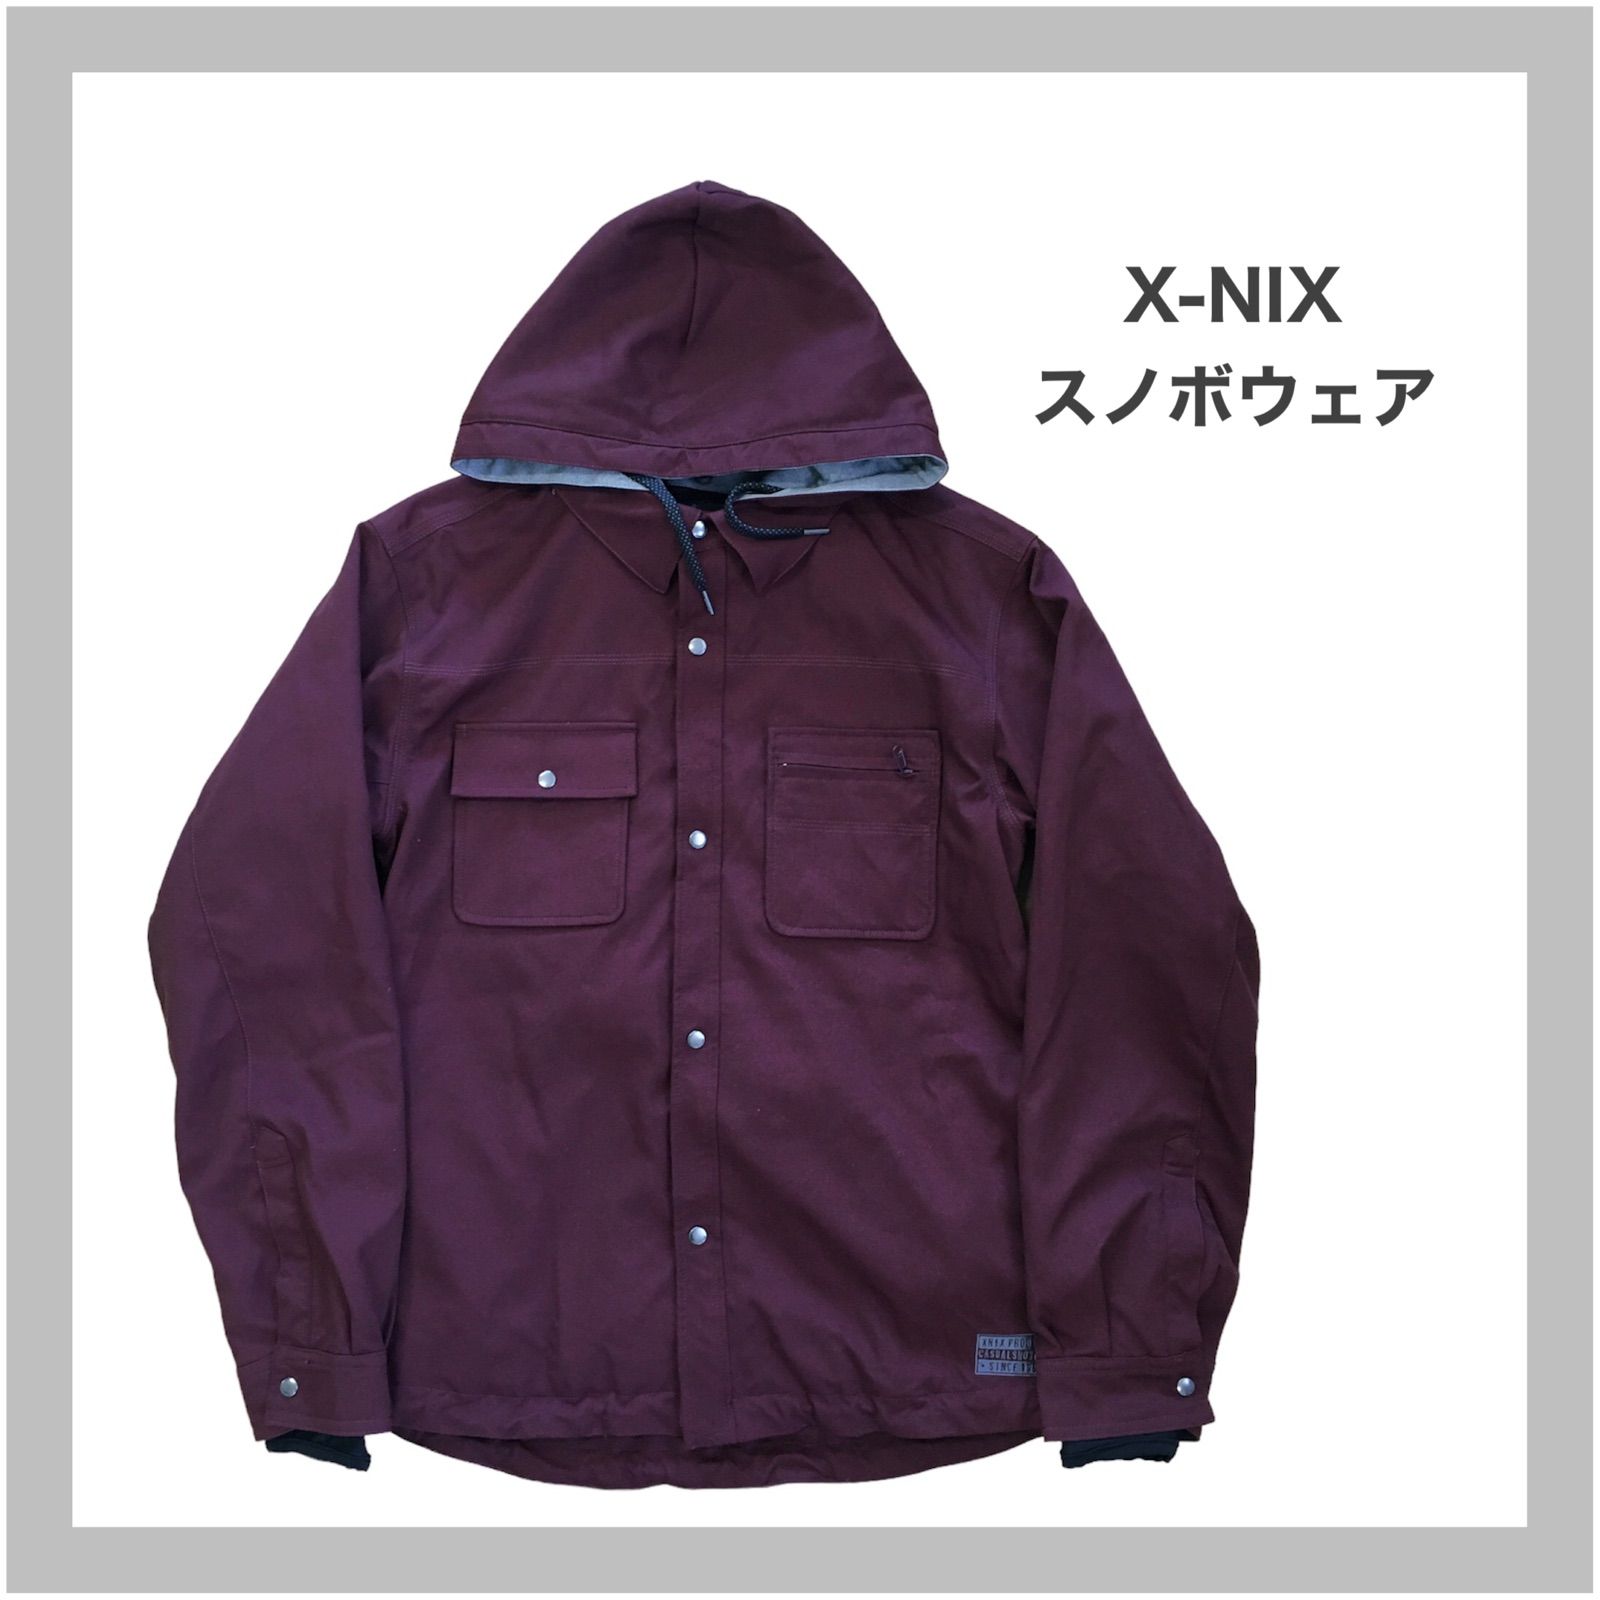 X-NIX(エクスニクス) スキー スノボ ウェア | myglobaltax.com